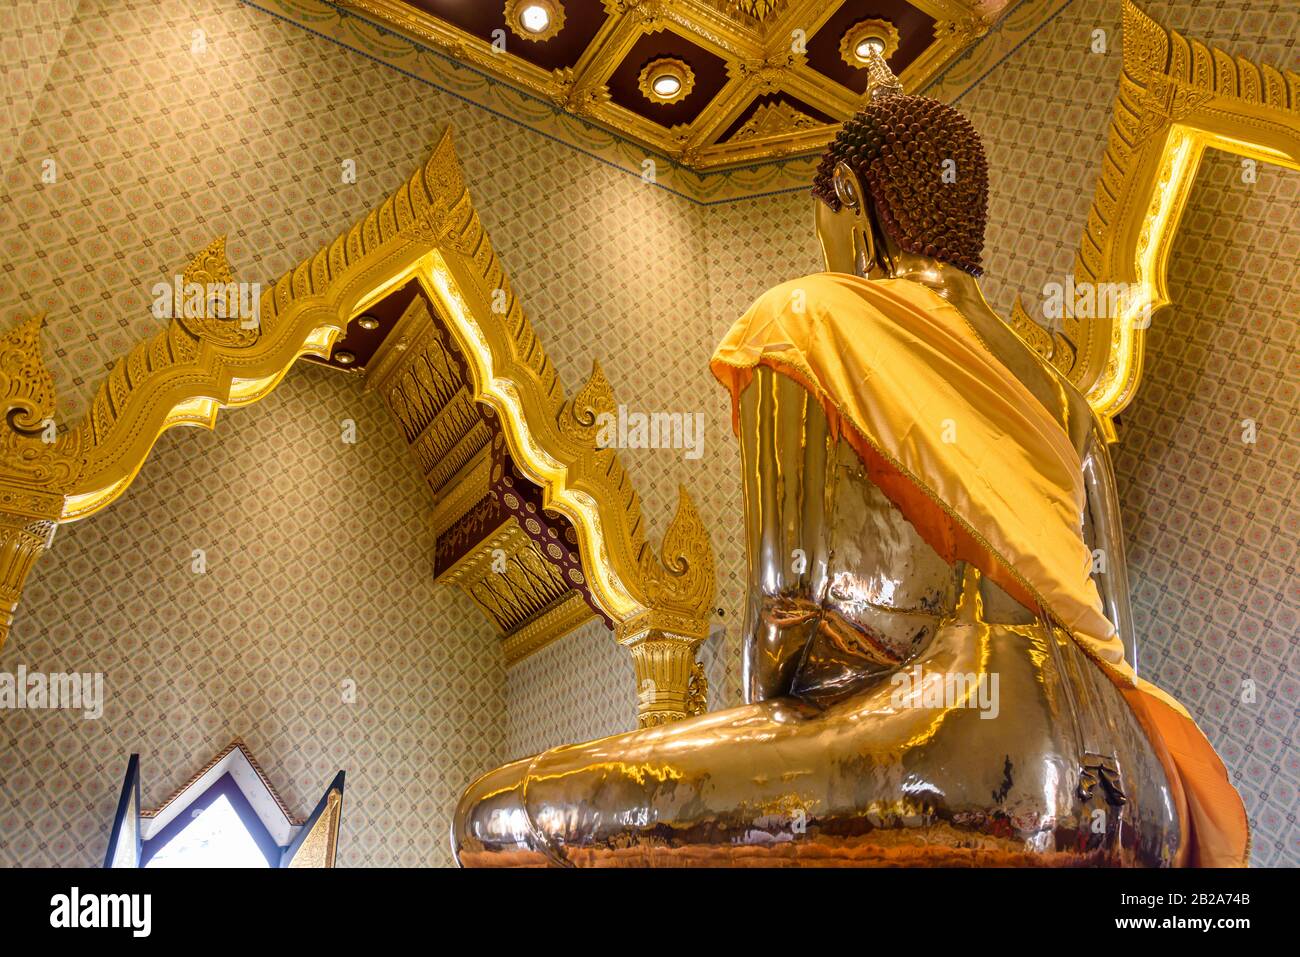 Golden statue of Buddha with a saffron robe inside the ornate Wat Songkhram, Bangkok, Thailand Stock Photo